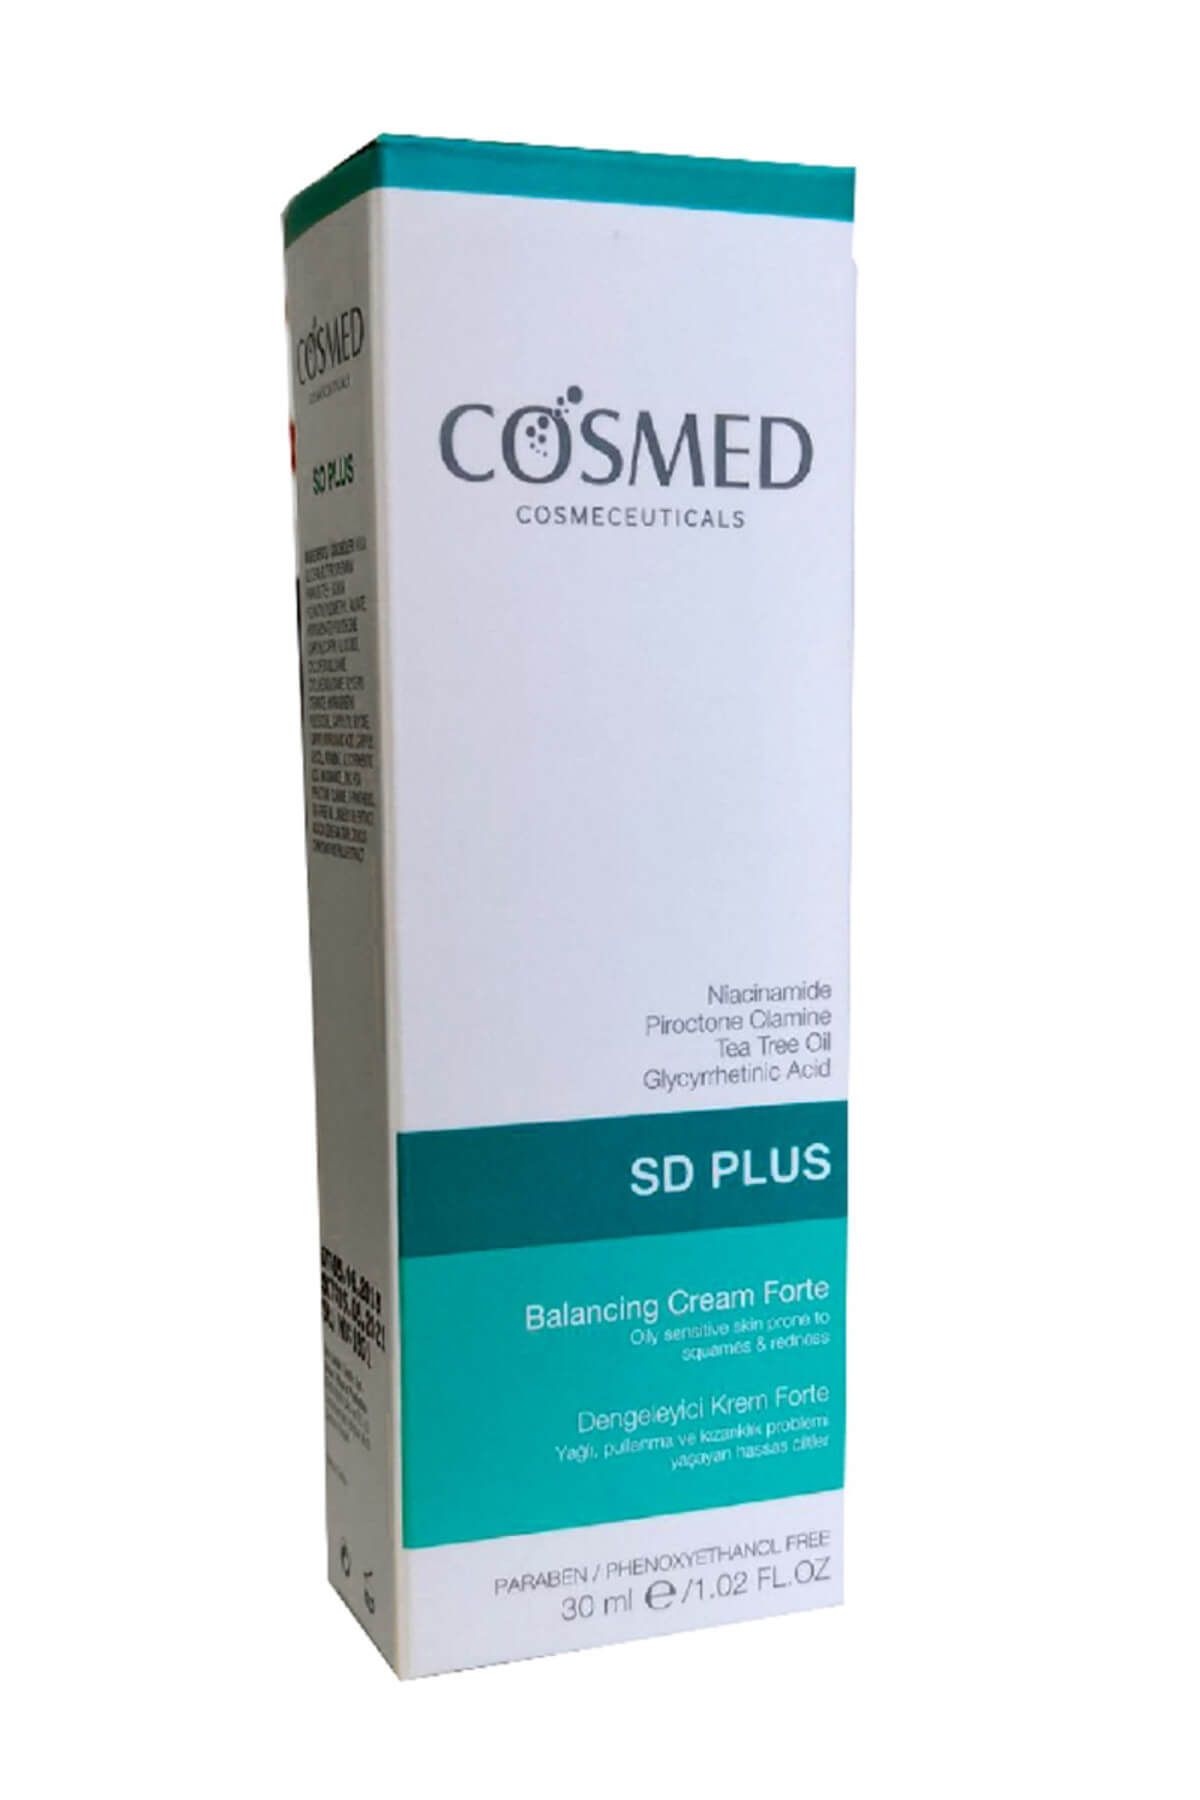 COSMED SD PLUS Balancing Cream Forte 30 ml 8699292992227